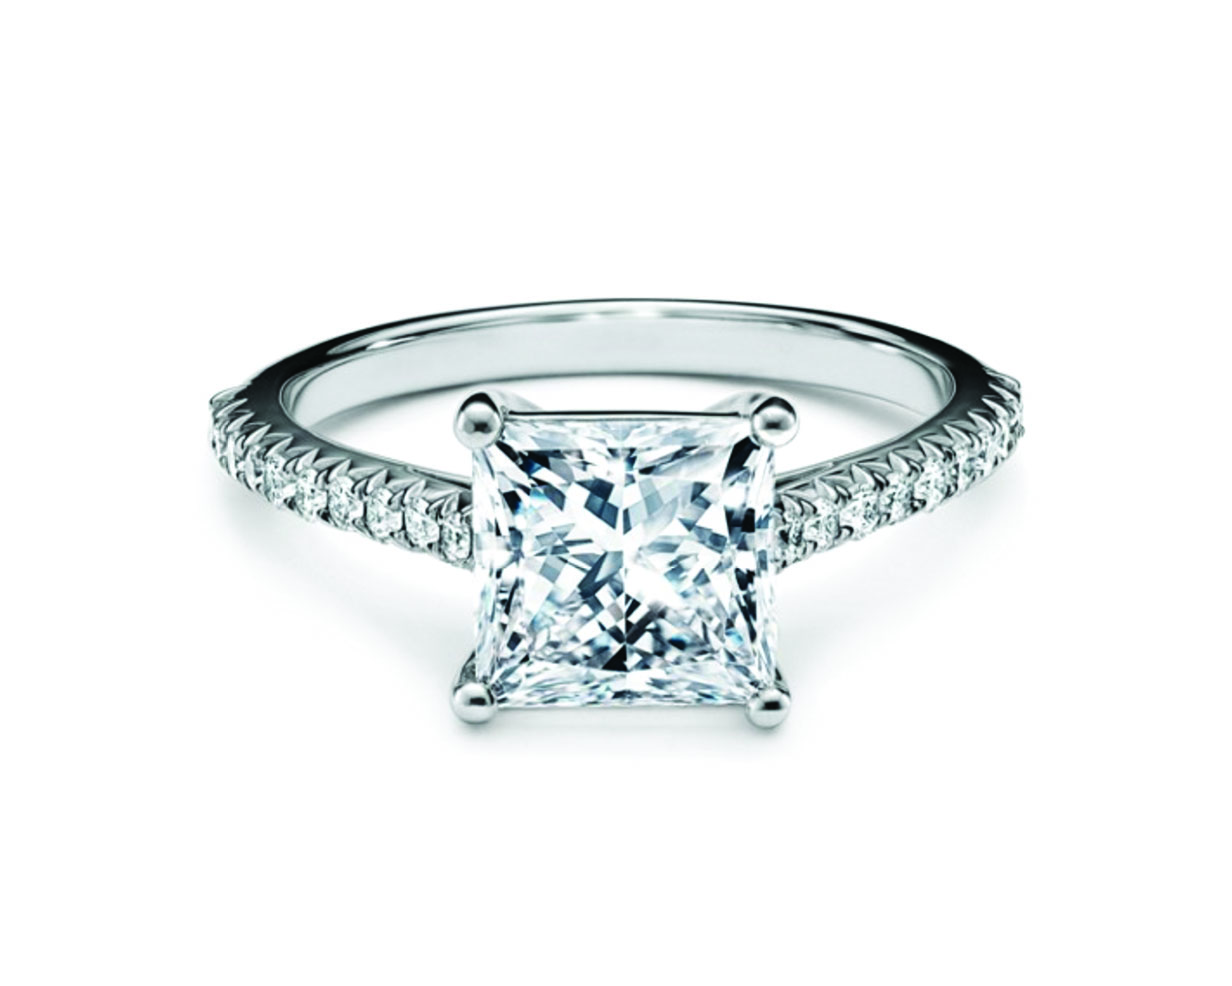 Princess cut diamond engagement ring with a platinum diamond band